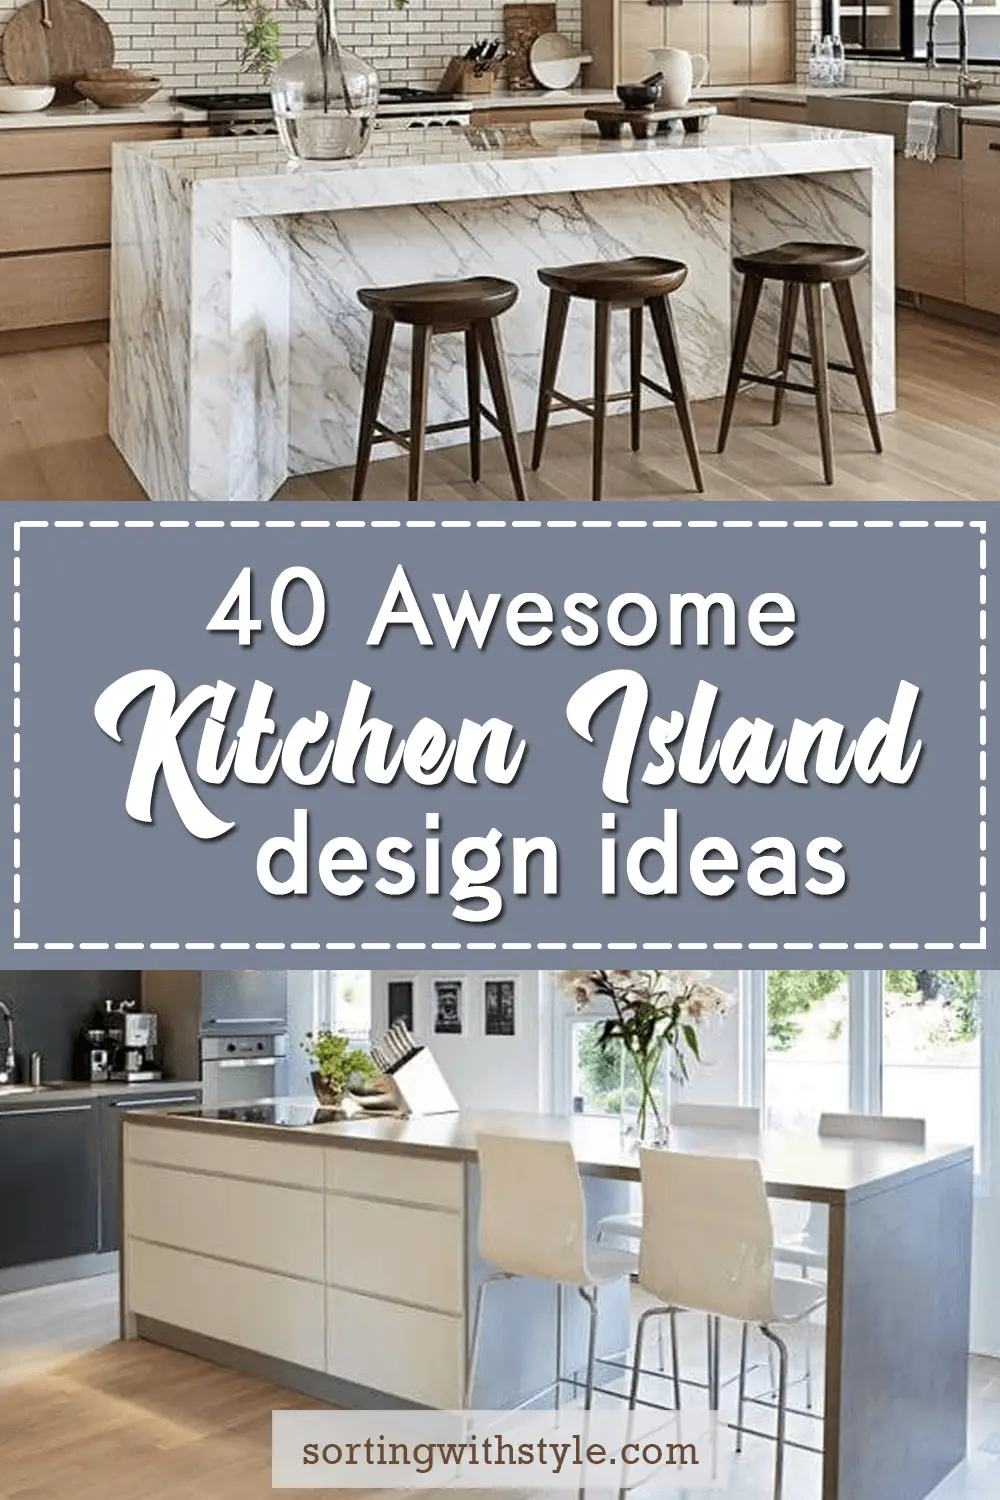 40 Awesome Kitchen Island Design Ideas, Kitchen Island Cabinet Layout Ideas